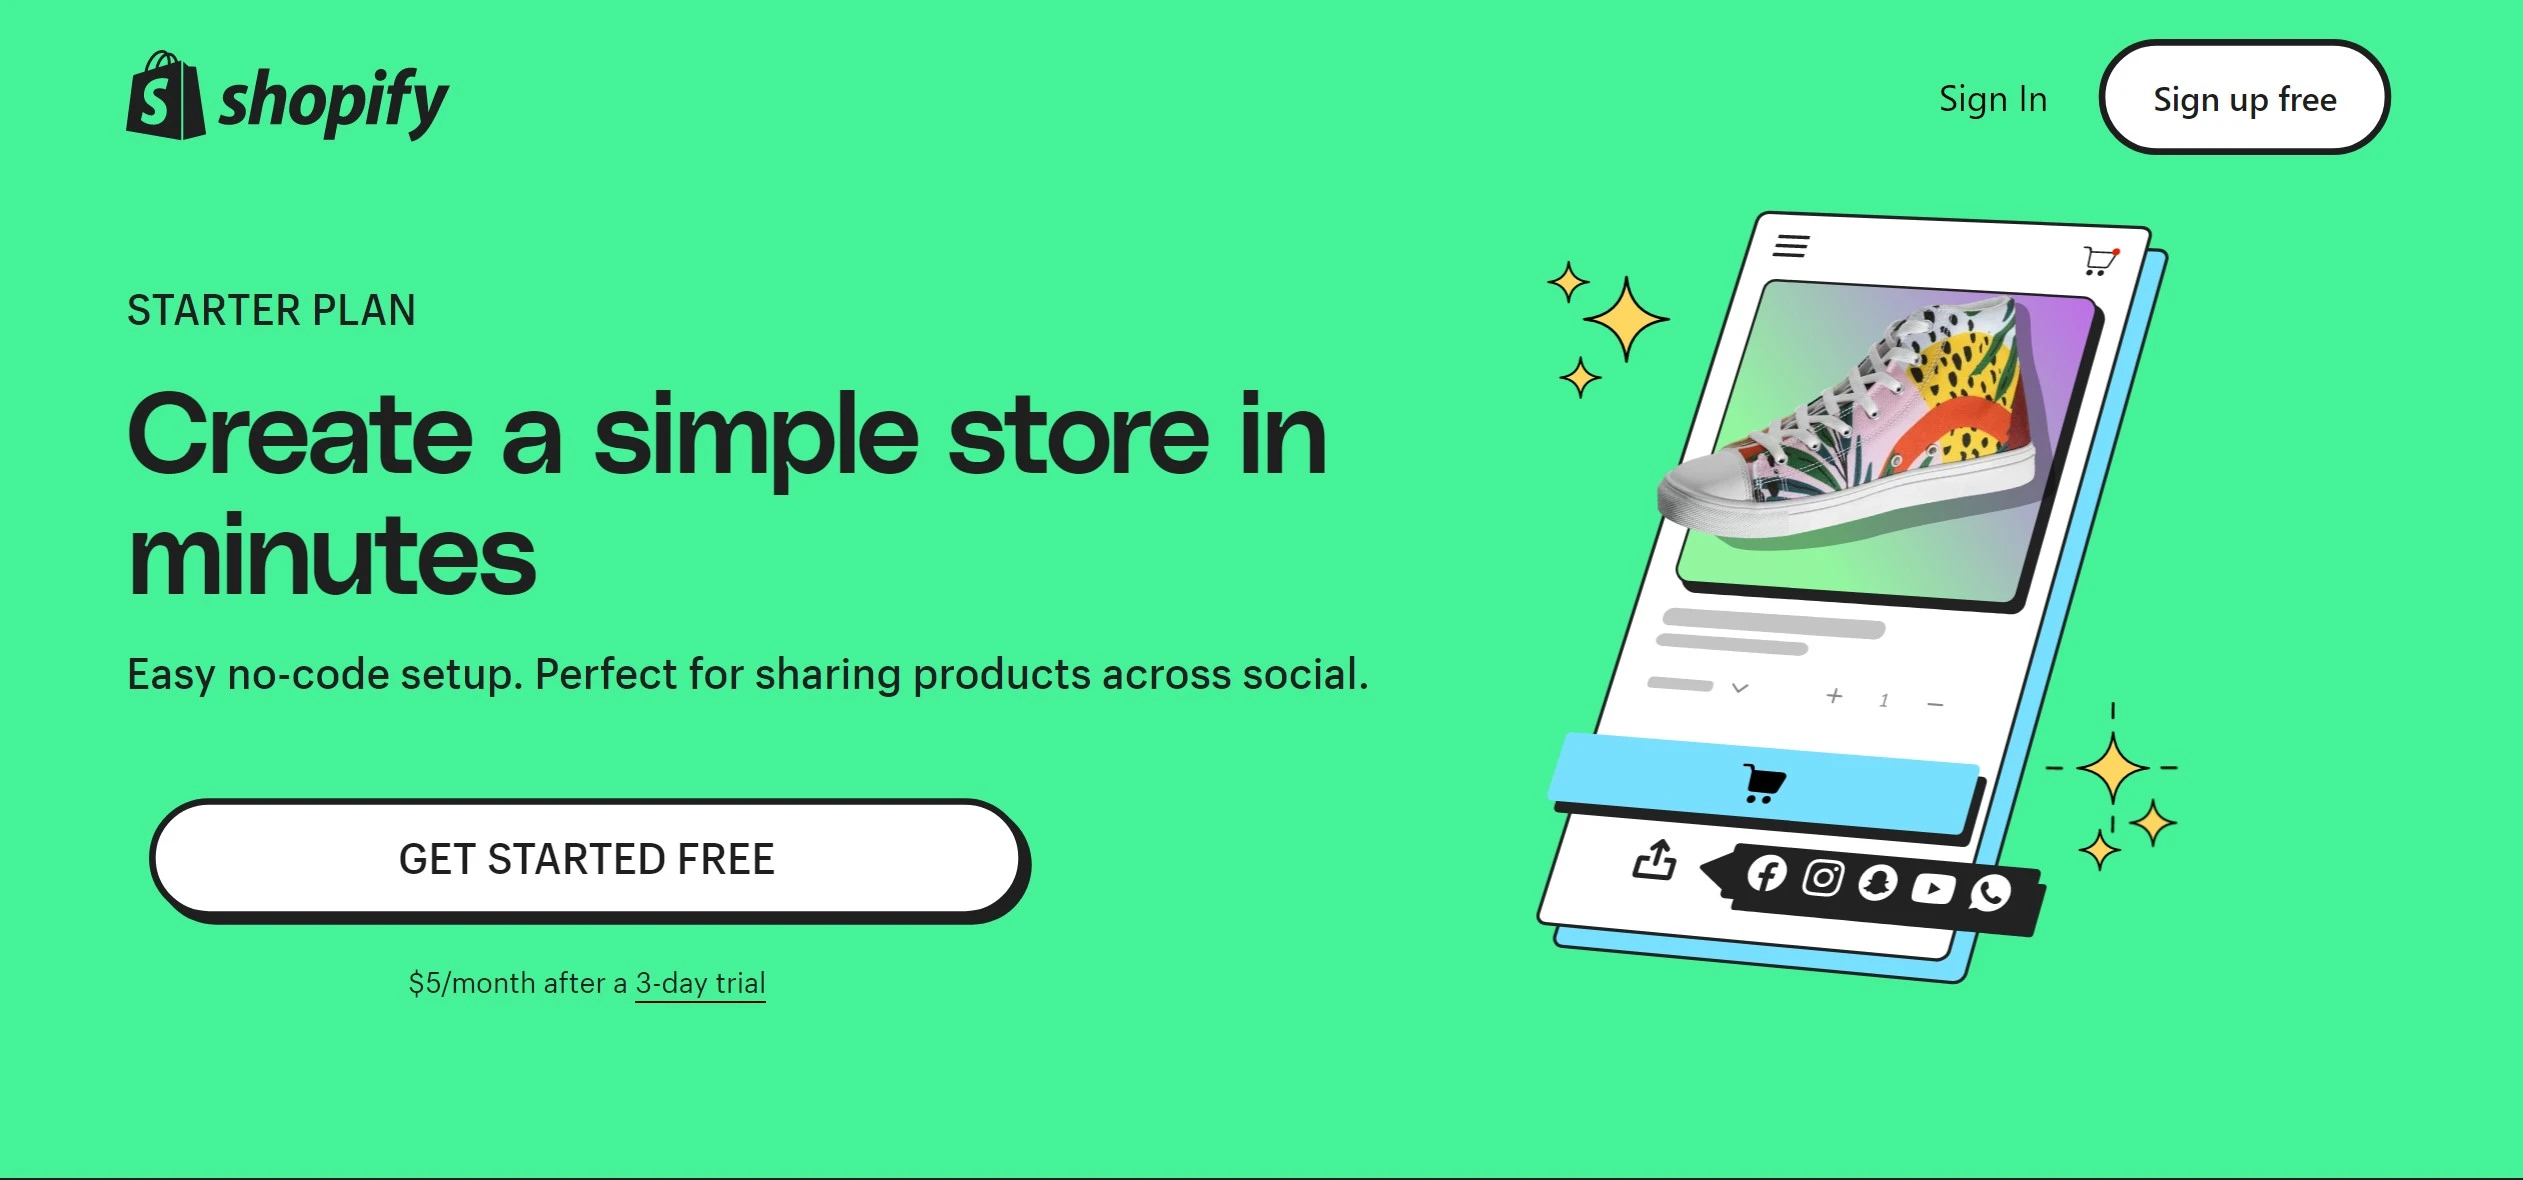 Shopify Starter page